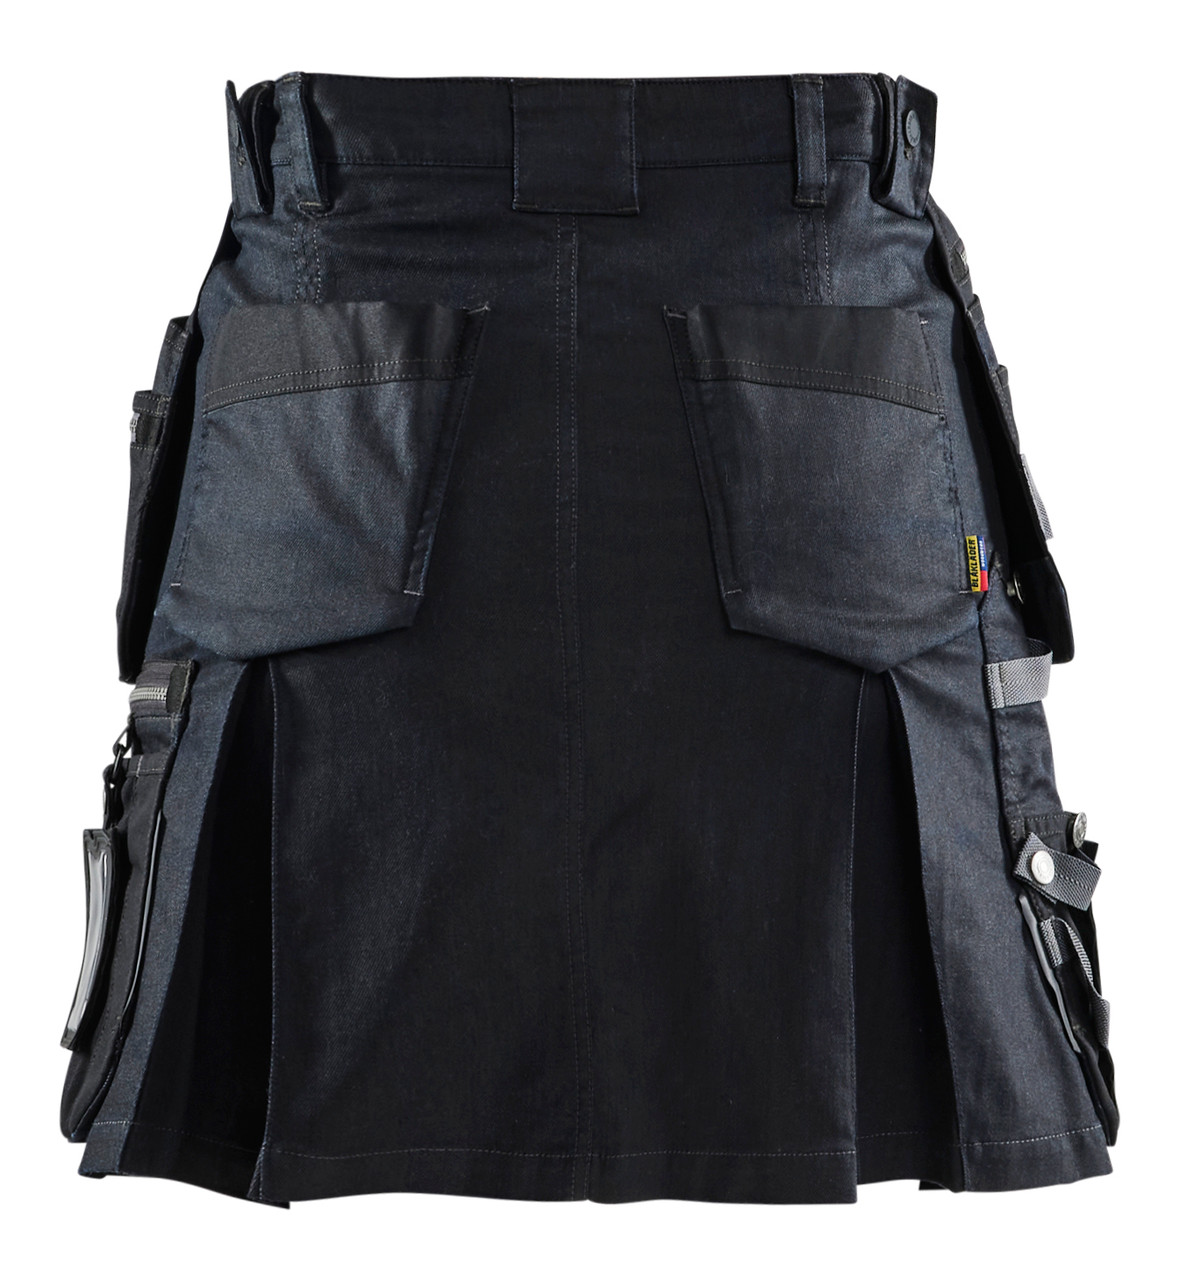 BLAKLADER Skirts | 7180 Womens Dark Navy Blue Skirts with Holster Pockets in Denim